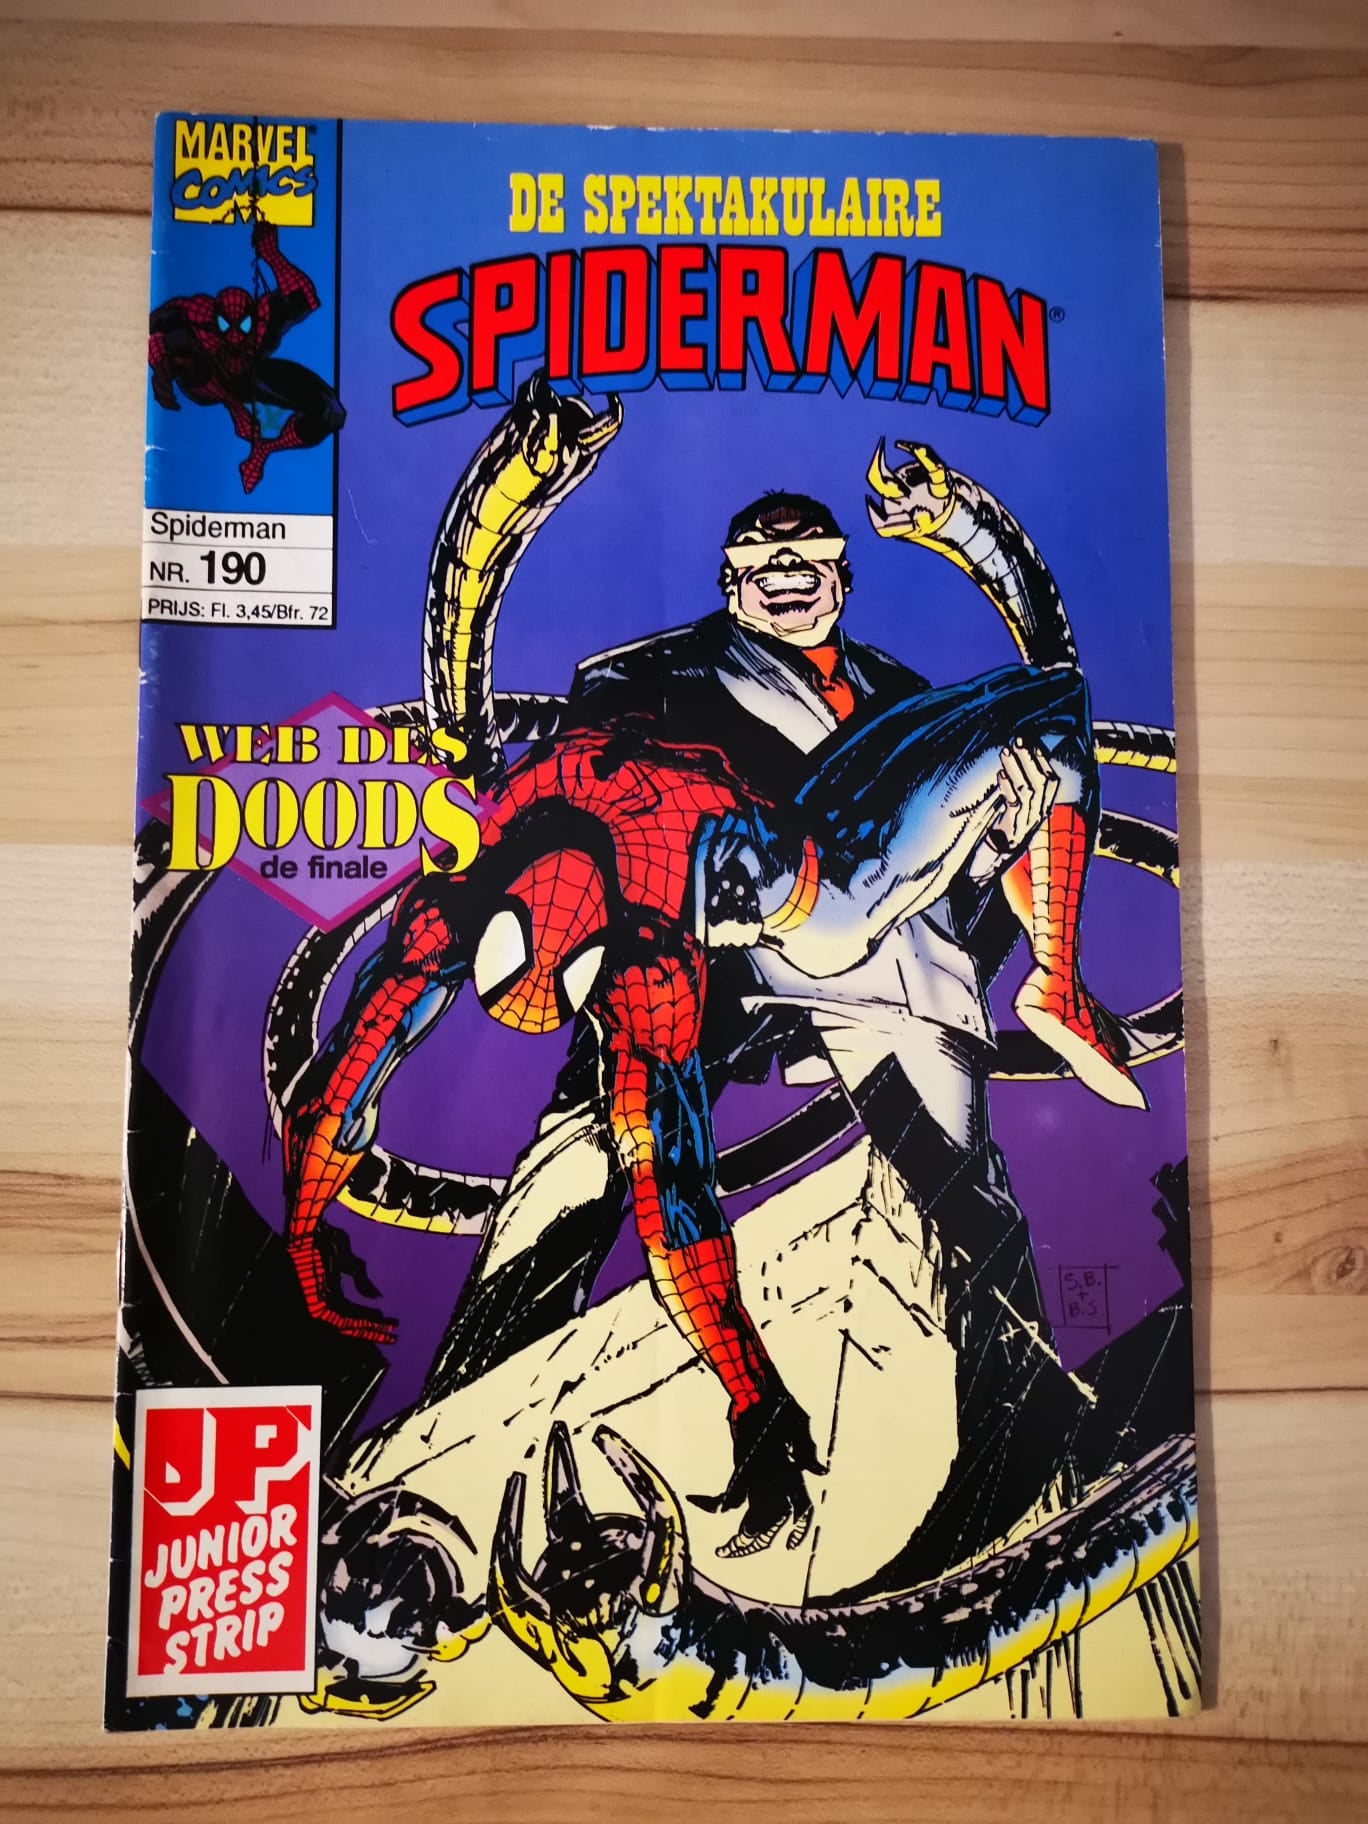 De spektakulaire spiderman #190